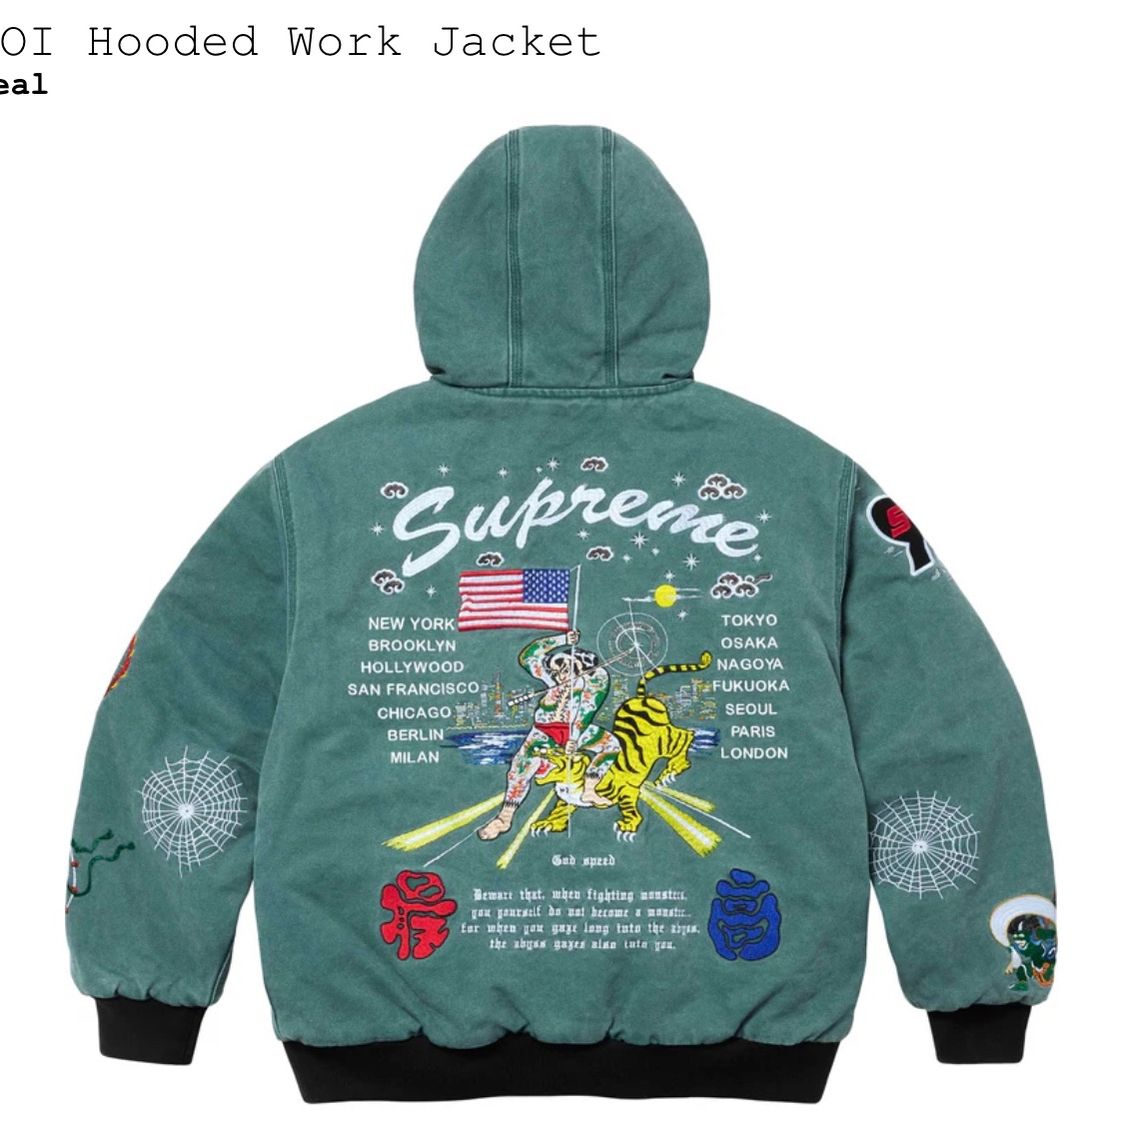 Supreme AOI Hooded Work Jacket “Teal” Sz: Medium 